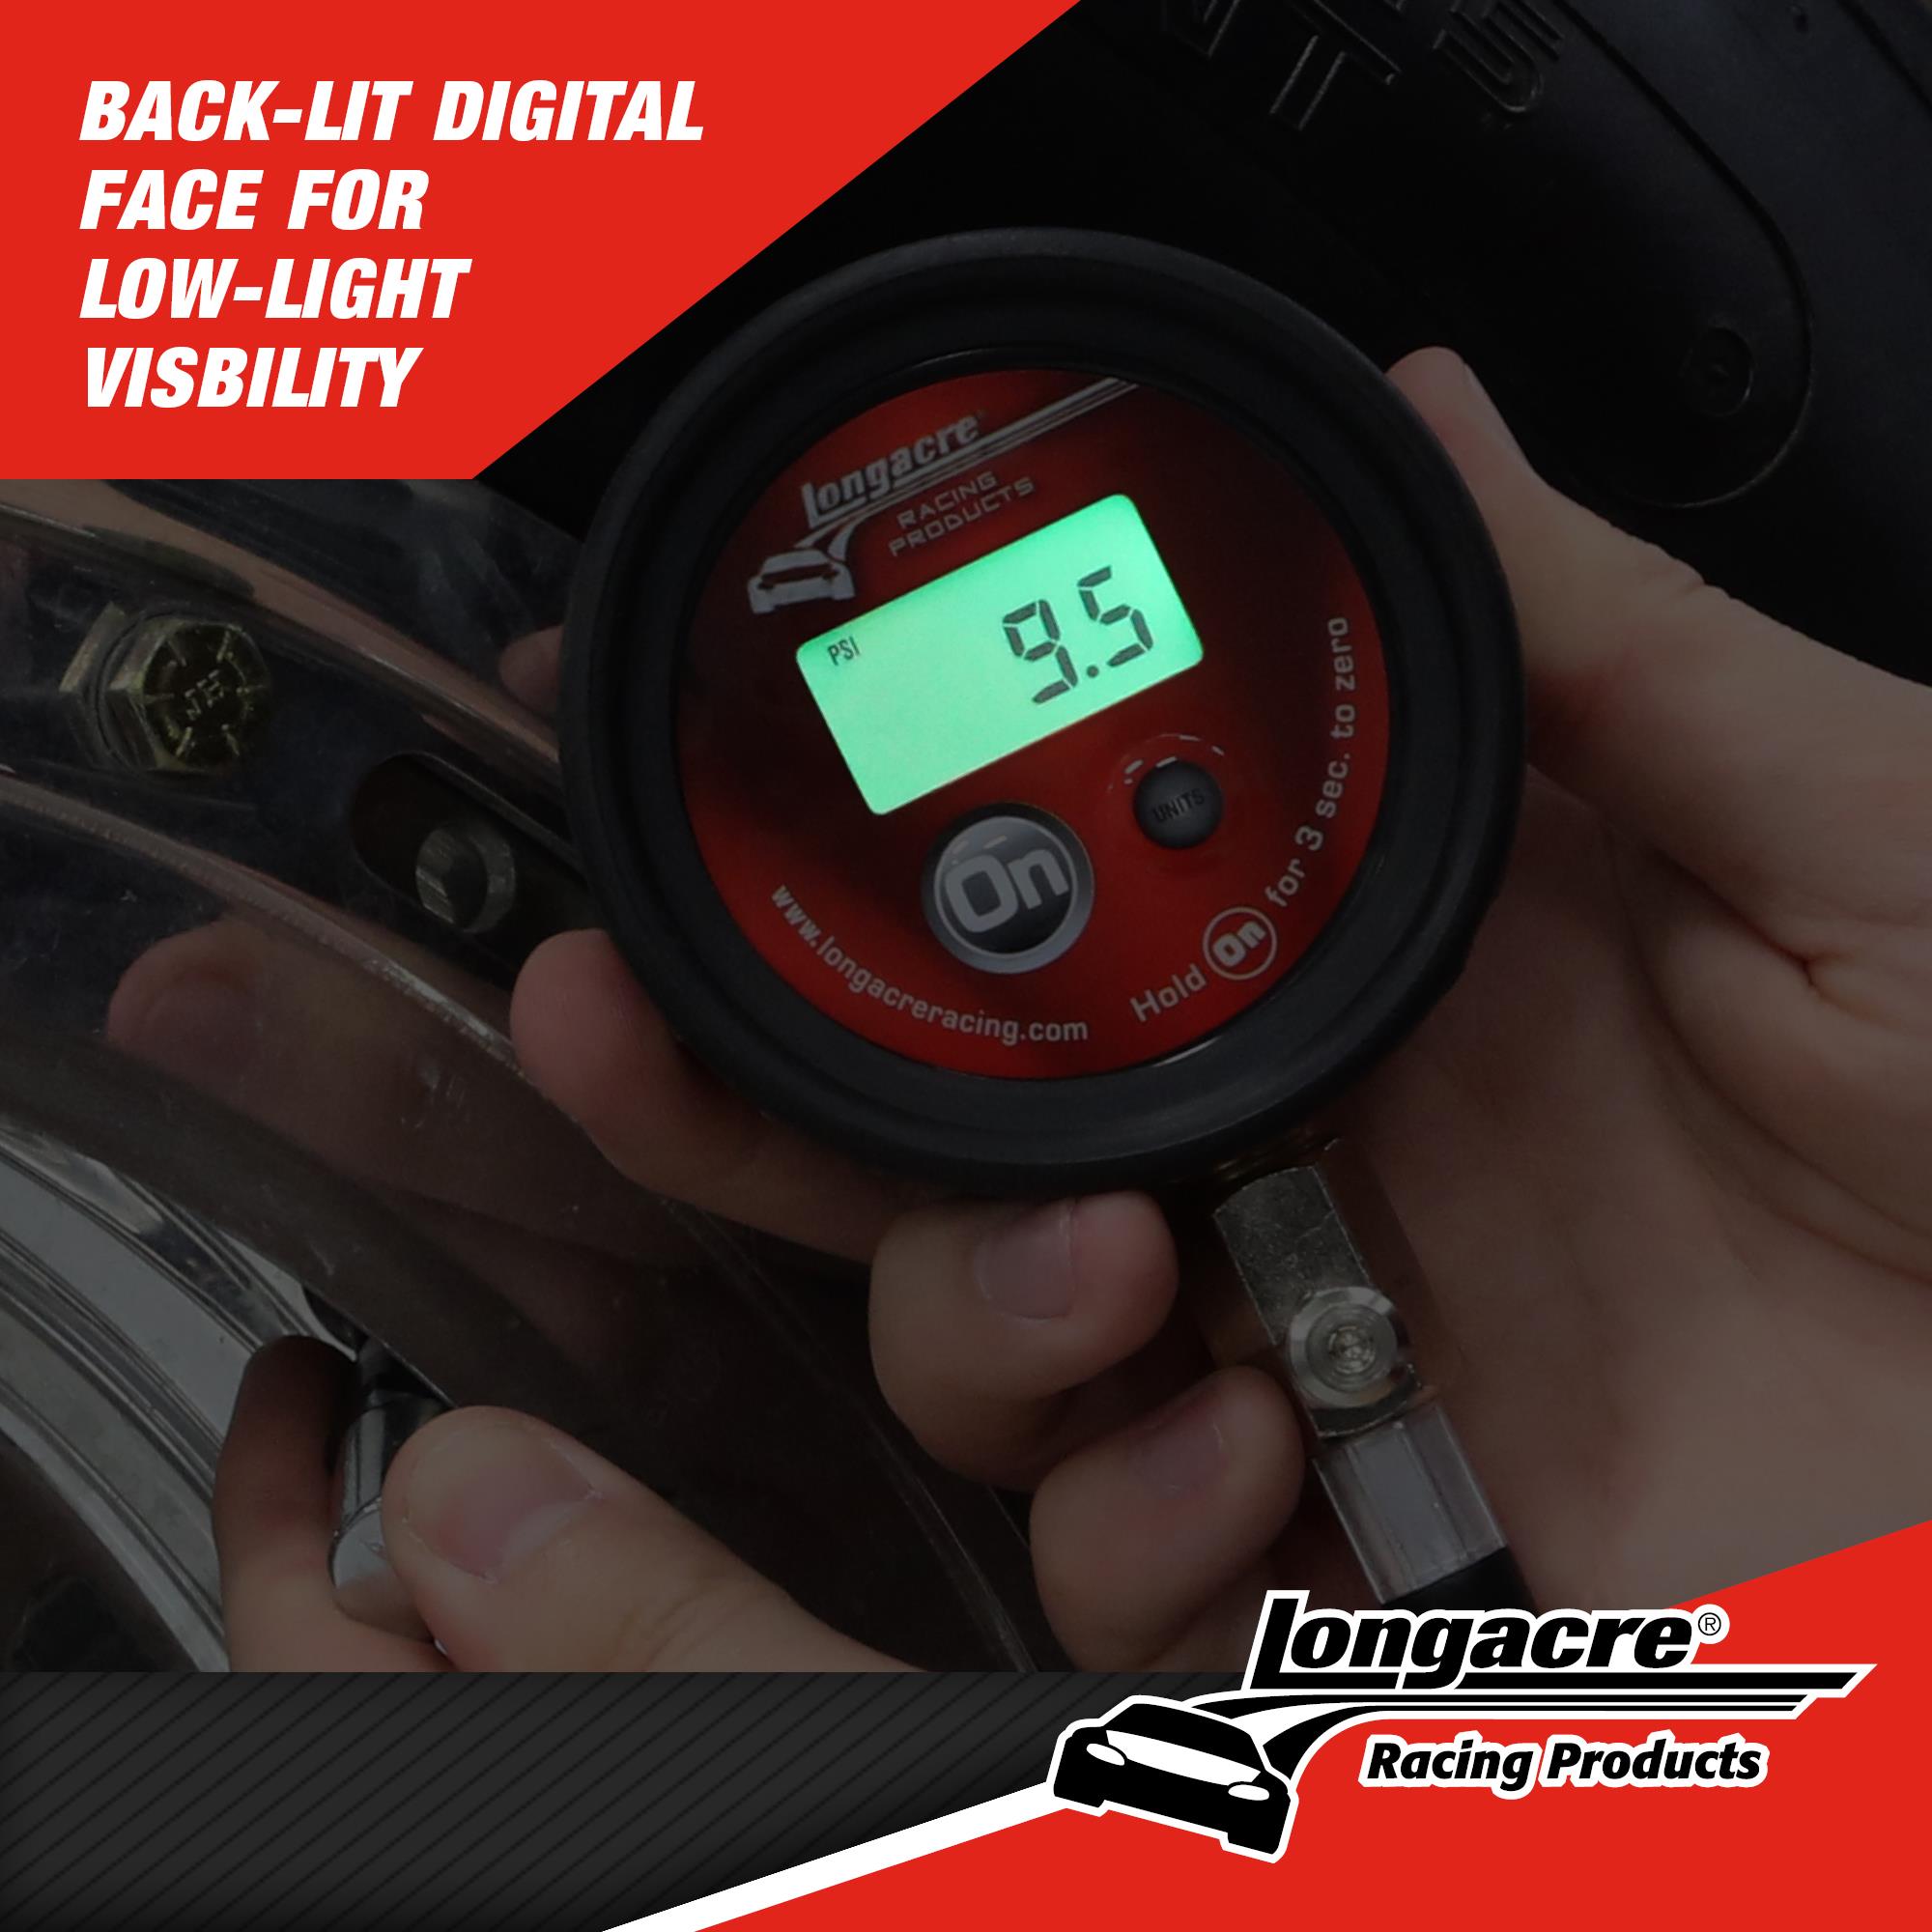 Semi Pro Digital Tire Pressure Gauge 0-60 psi